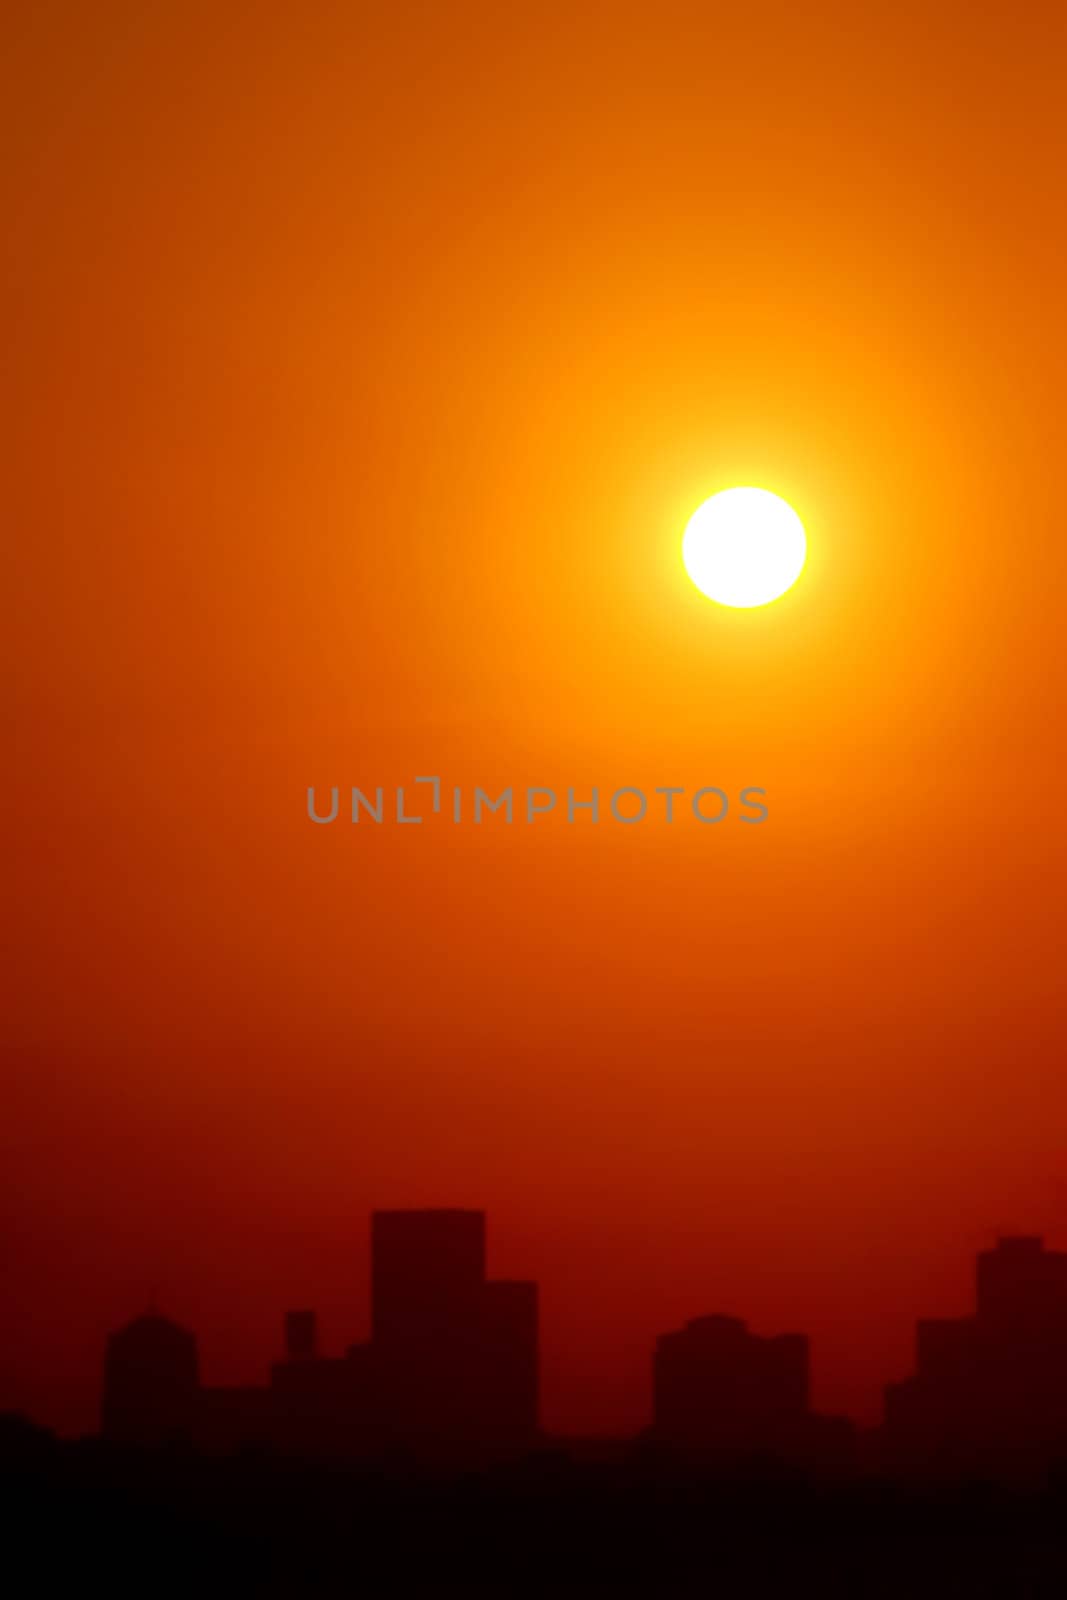 Burning sun seen hazily above an urban landscape